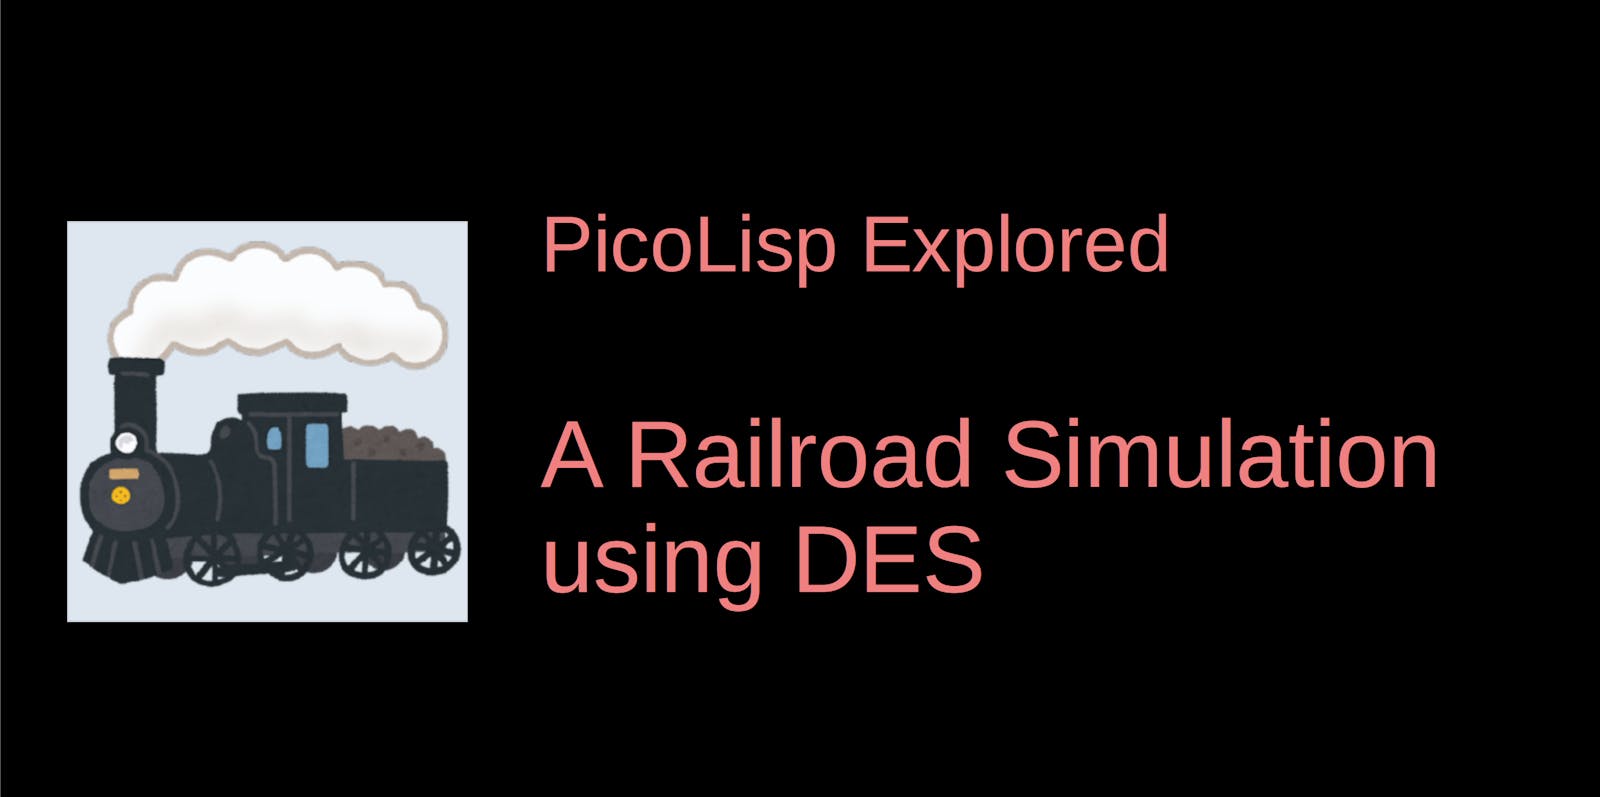 A Railroad Simulation with DES